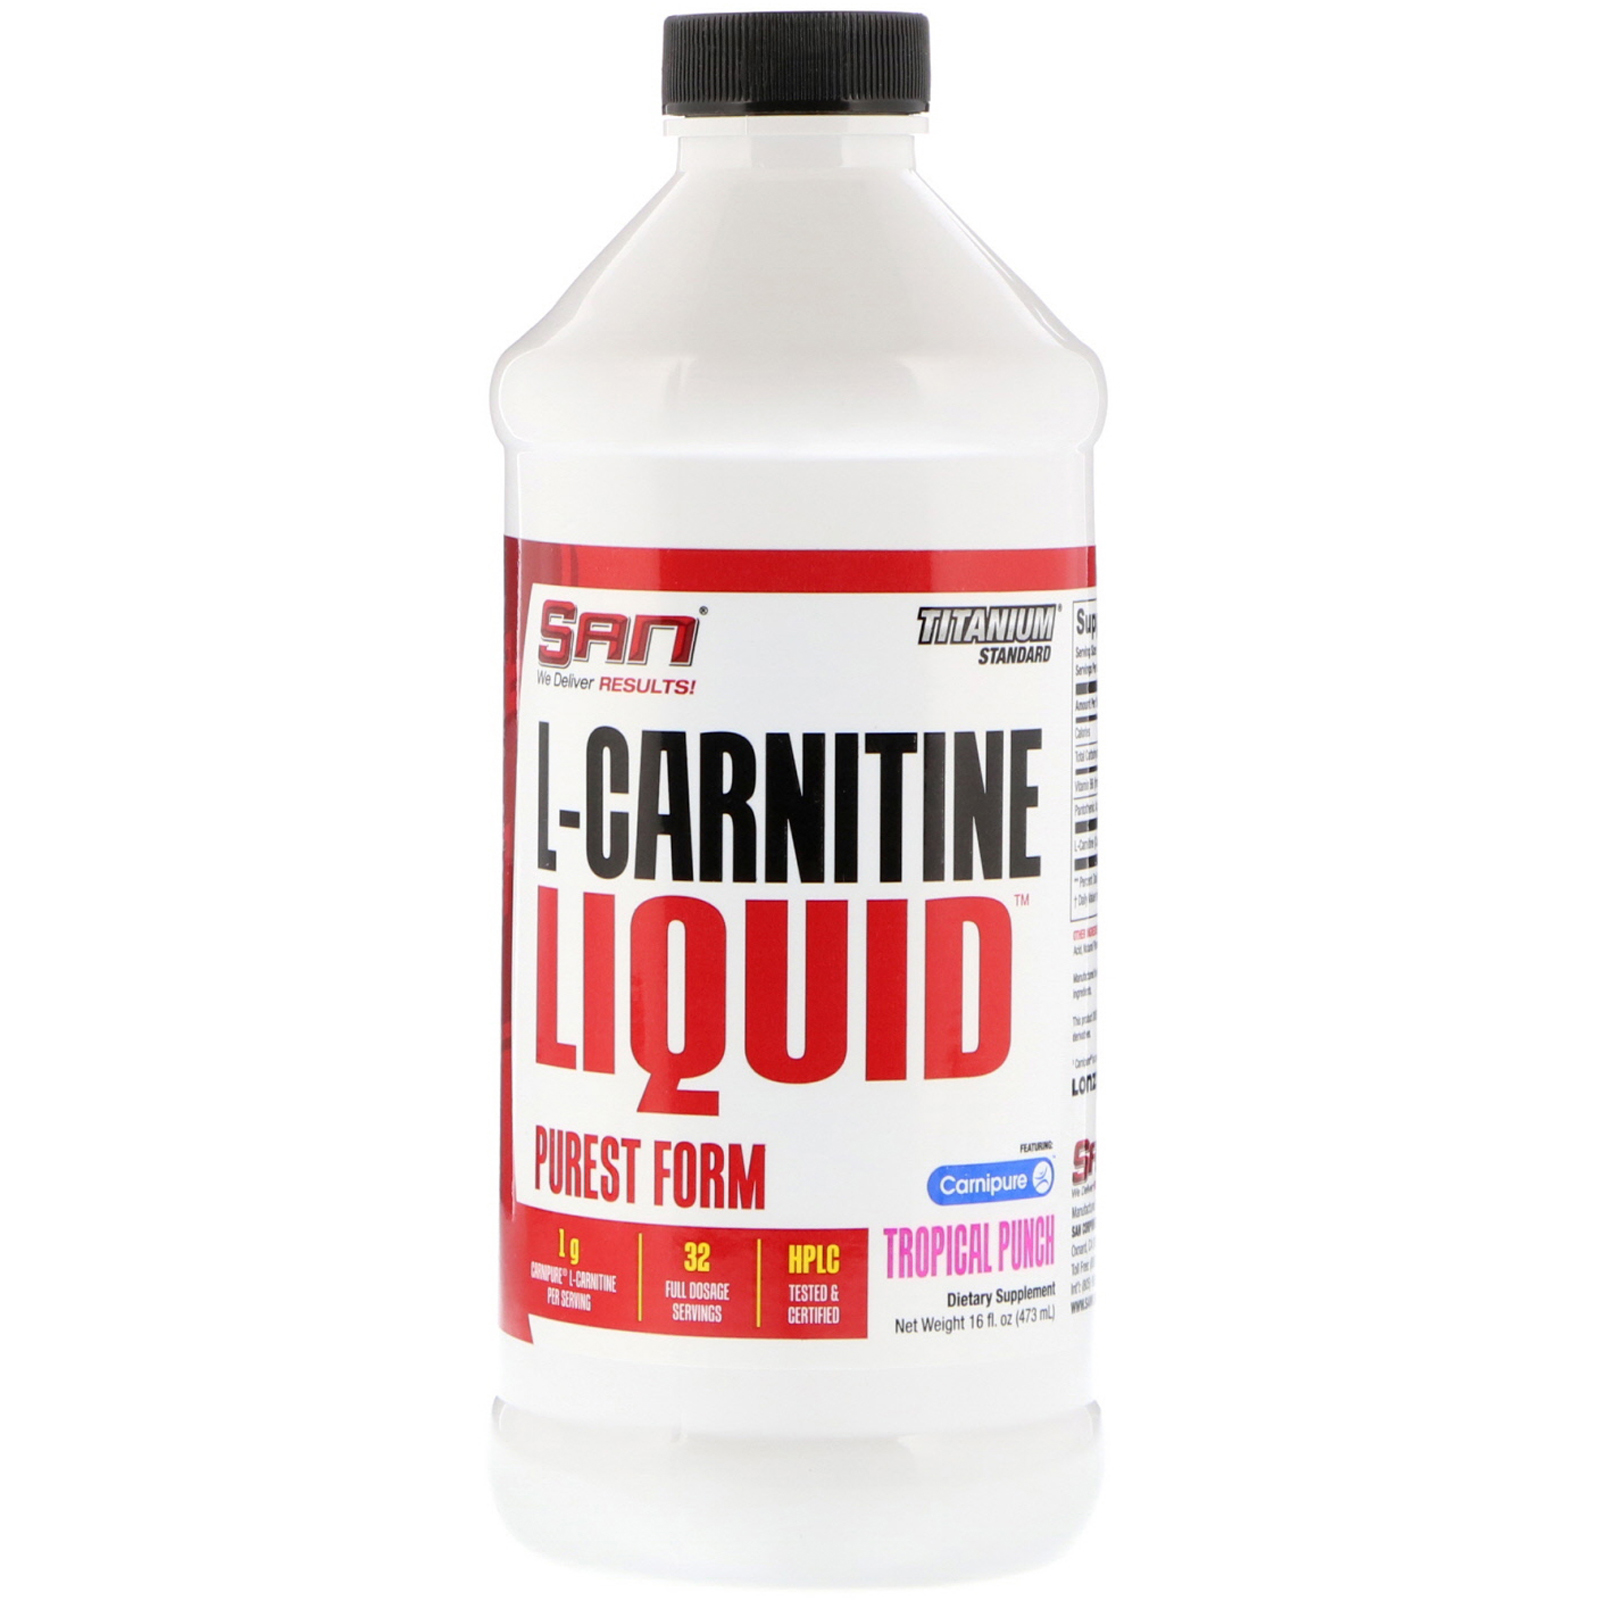 L Carnitine San. Liquid l-Carnitine. L карнитин жидкий. L Carnitine в жидком виде. Как пить жидкий карнитин